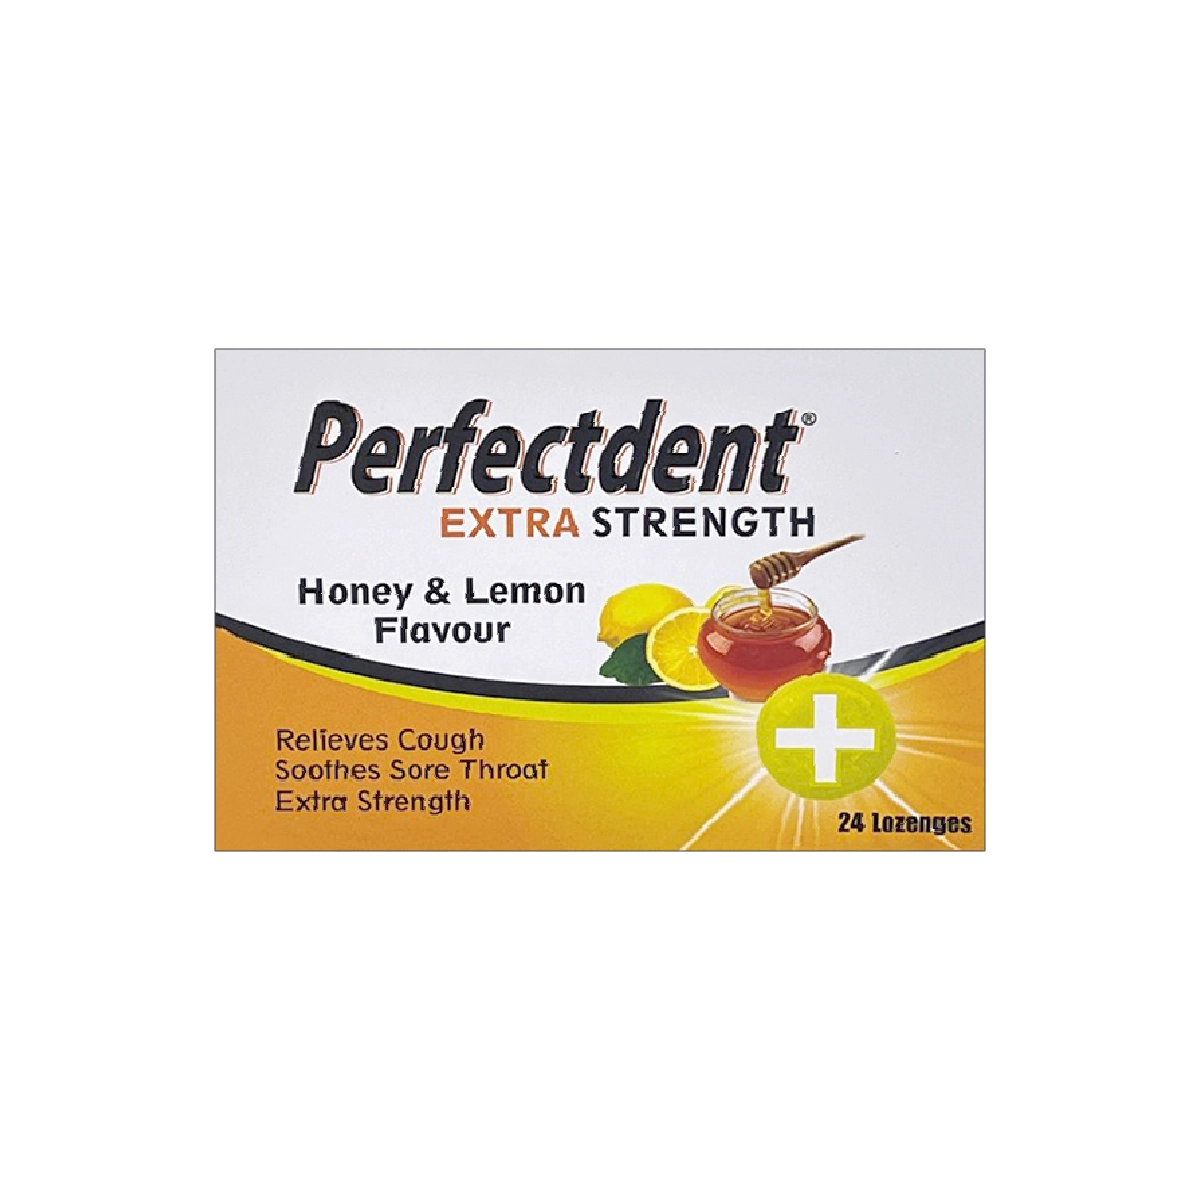 Perfectdent Extra Strength Lozenges - Honey & Lemon